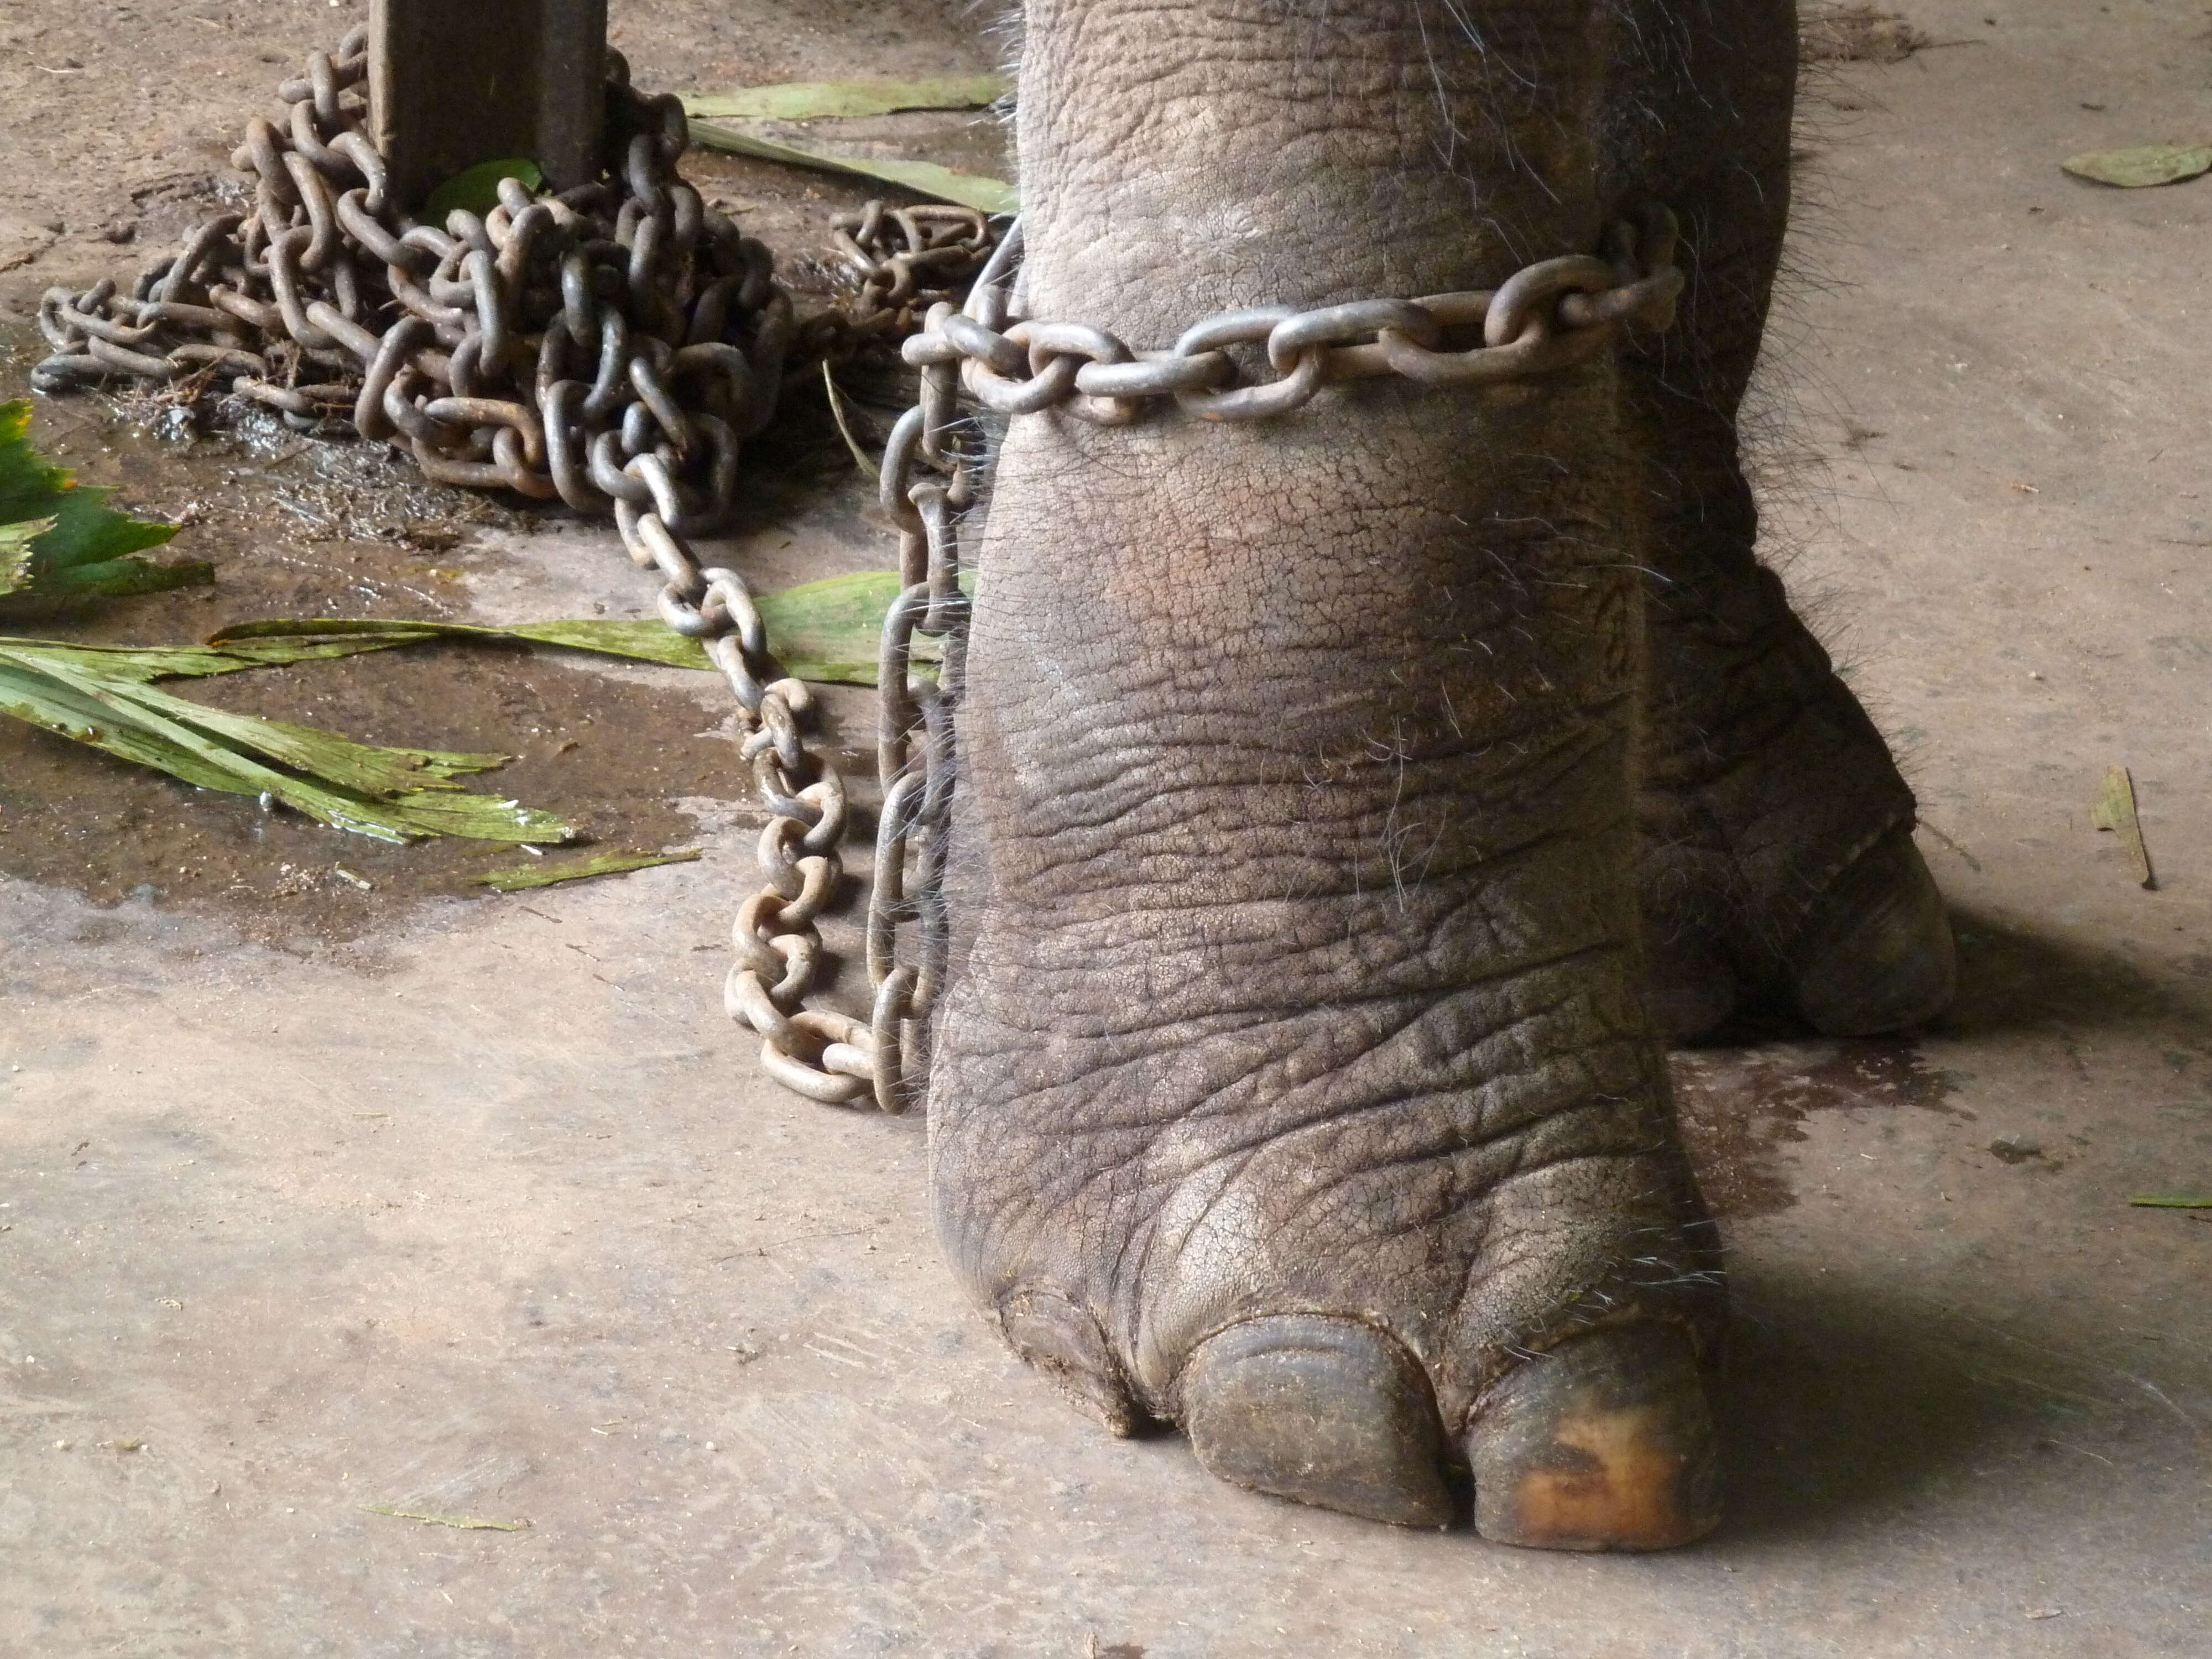 Elephant with chain around his leg